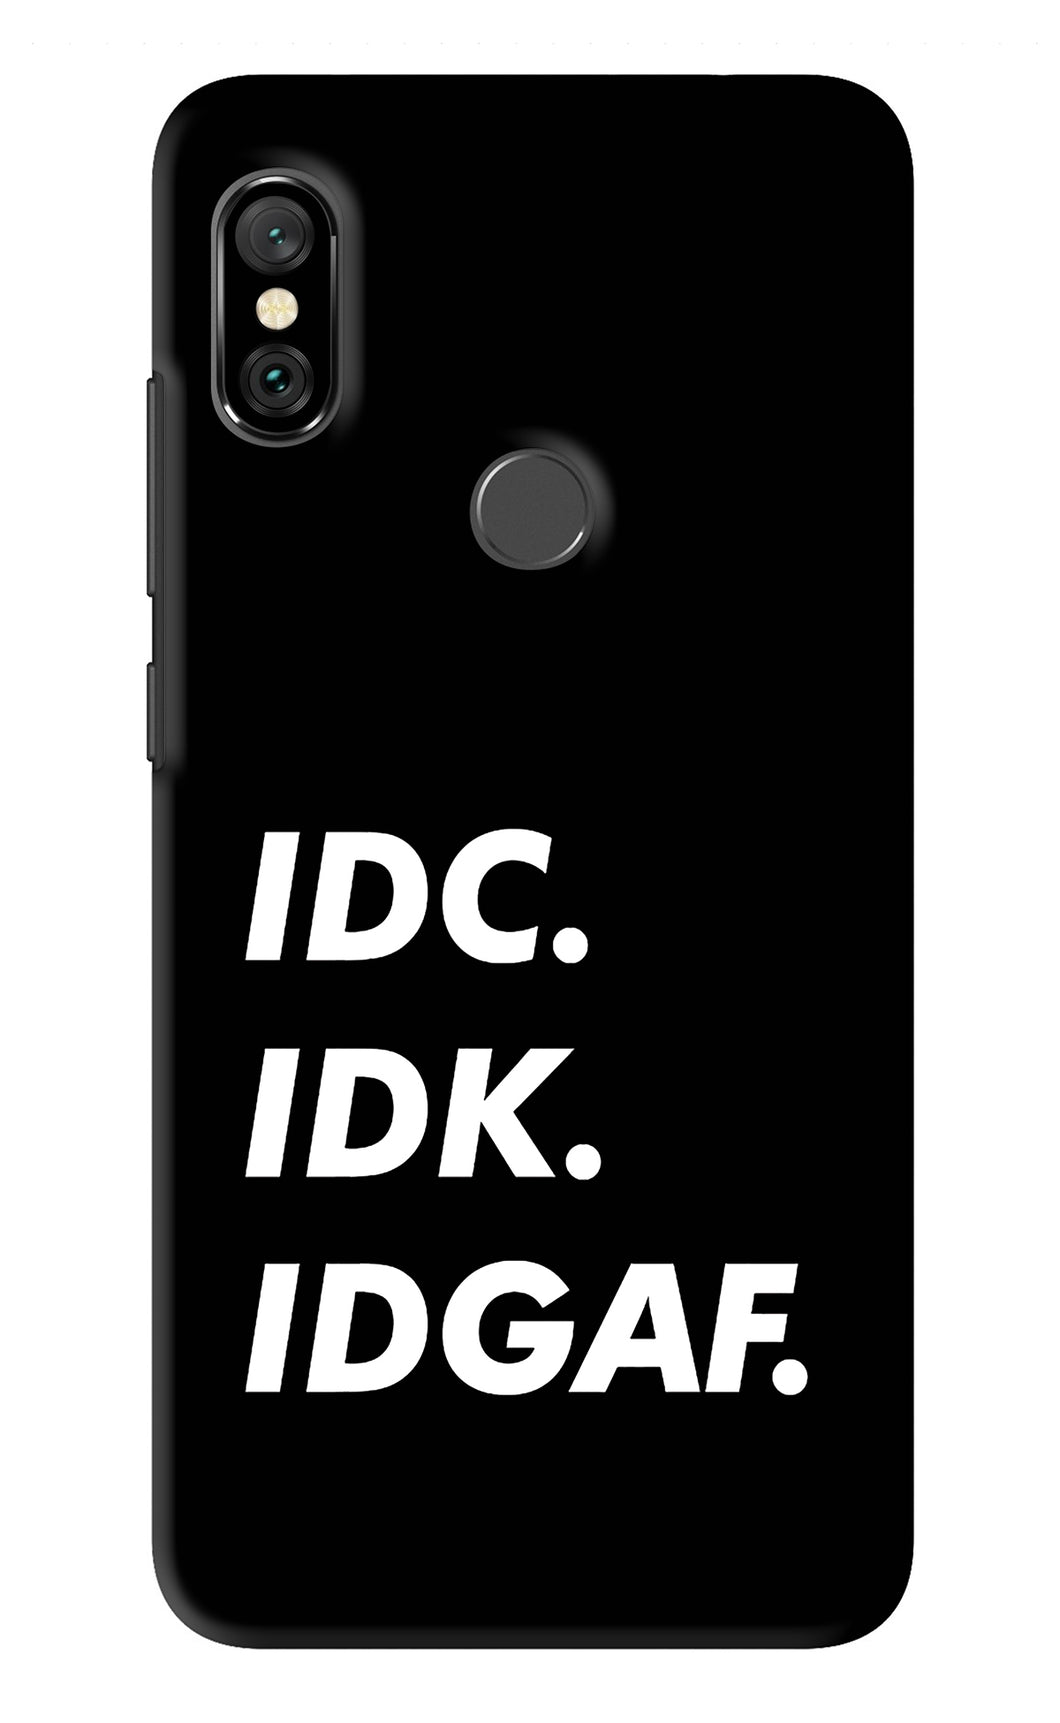 Idc Idk Idgaf Xiaomi Redmi Note 6 Pro Back Skin Wrap